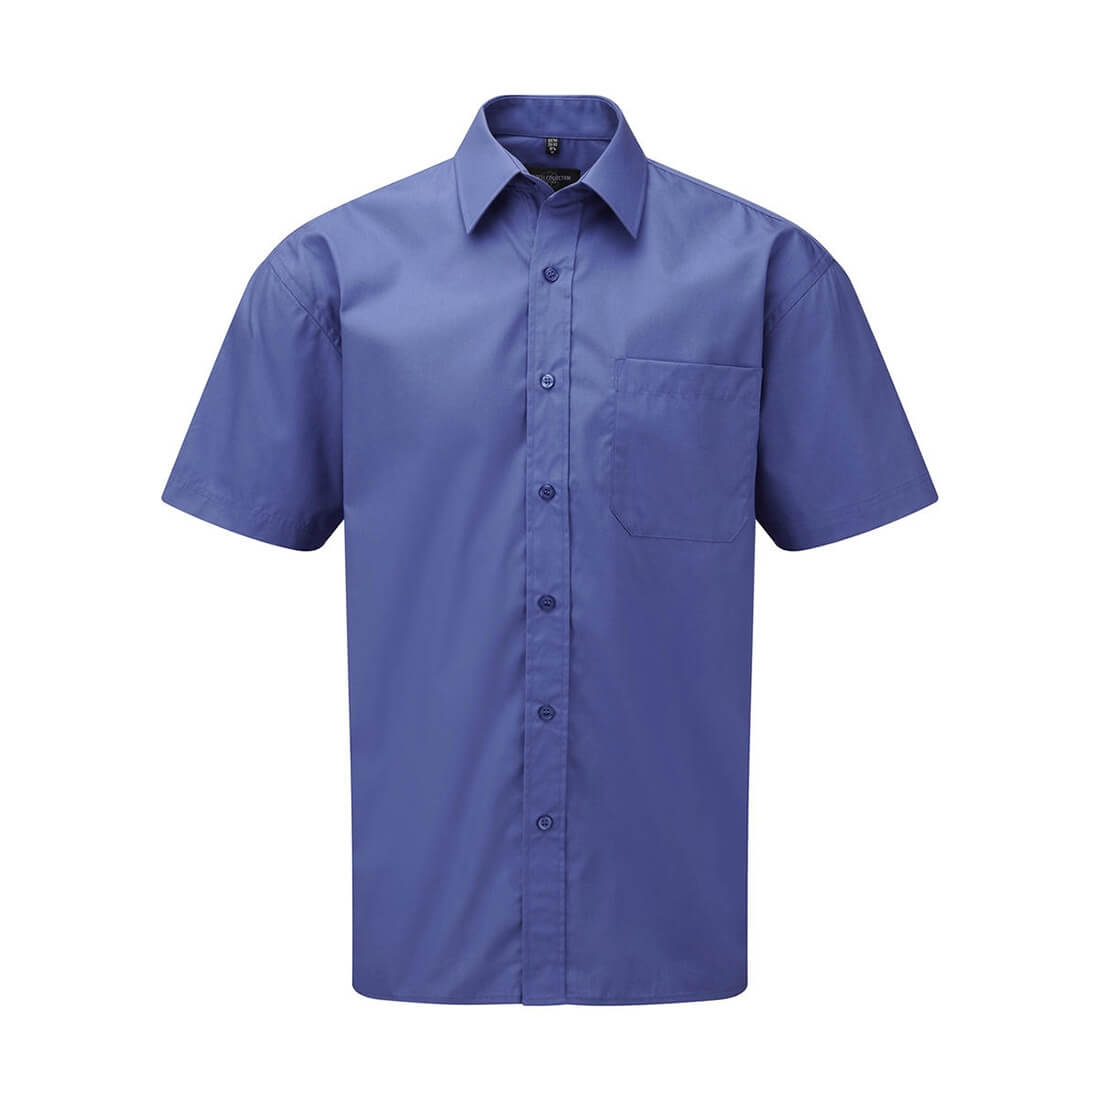 Baumwolle-Popelin Hemd - Arbeitskleidung